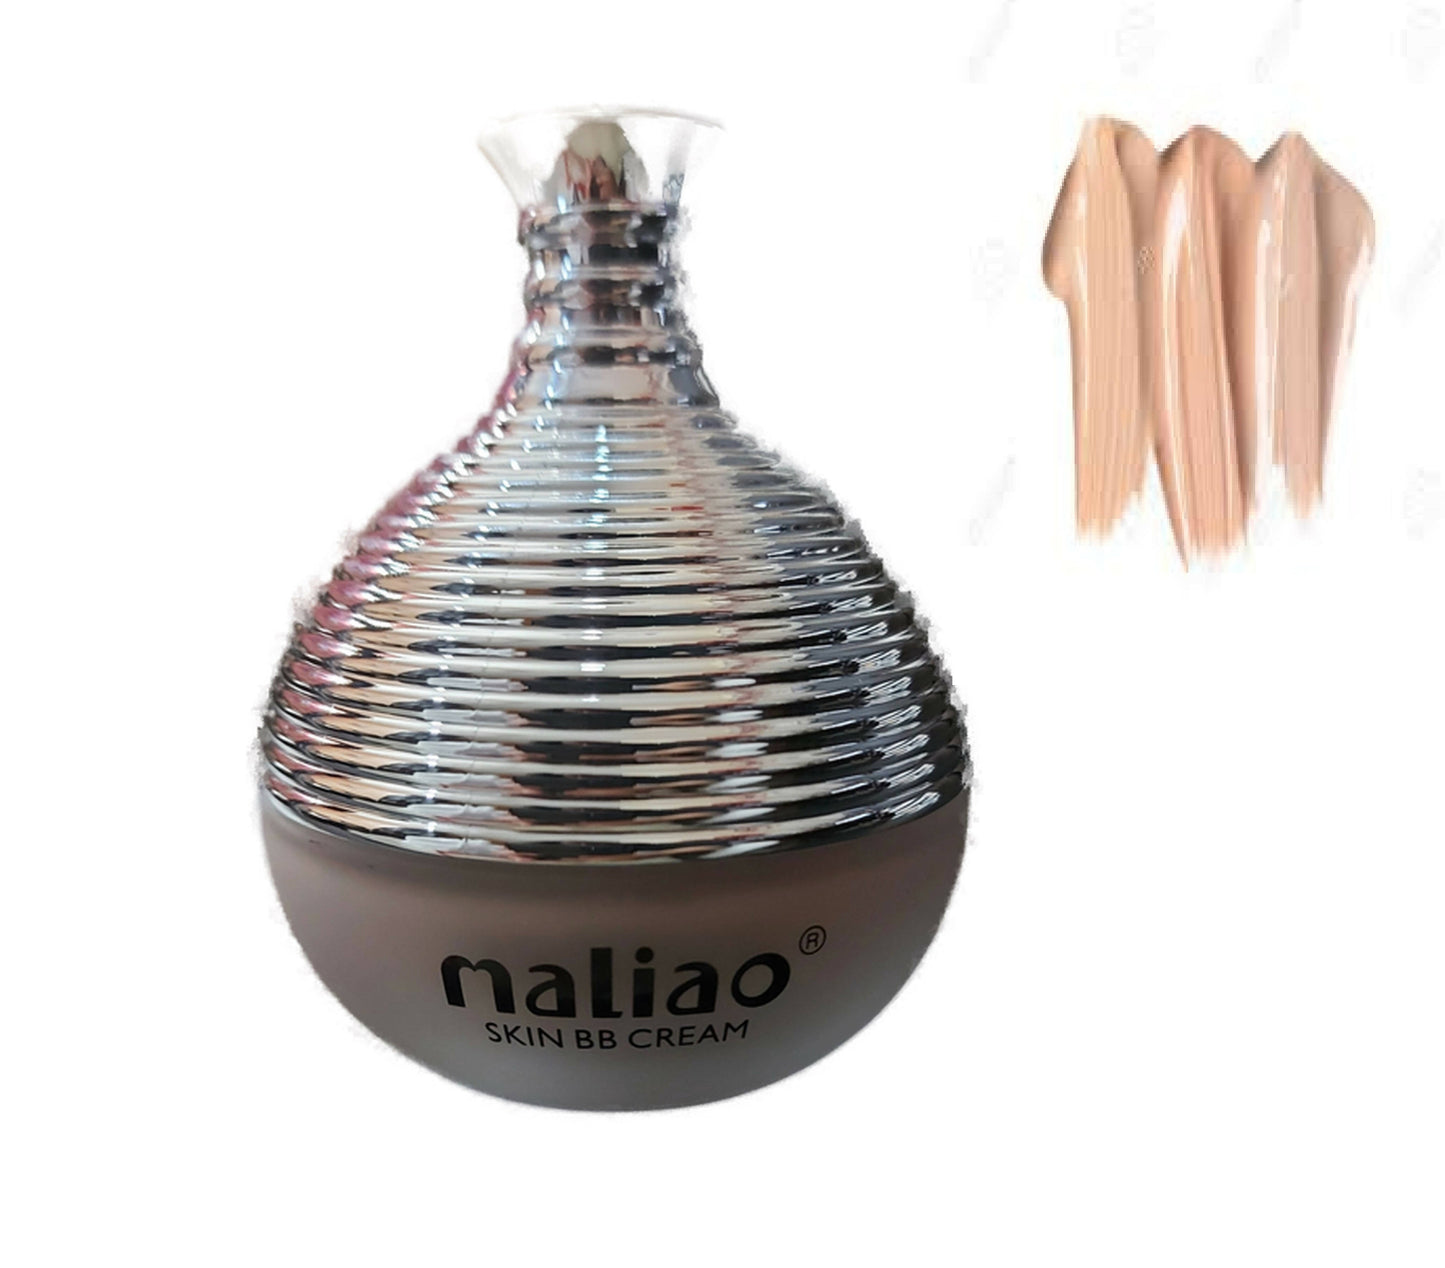 Maliao Skin Beauty Balm Broad Spectrum Foundation With SPF 20